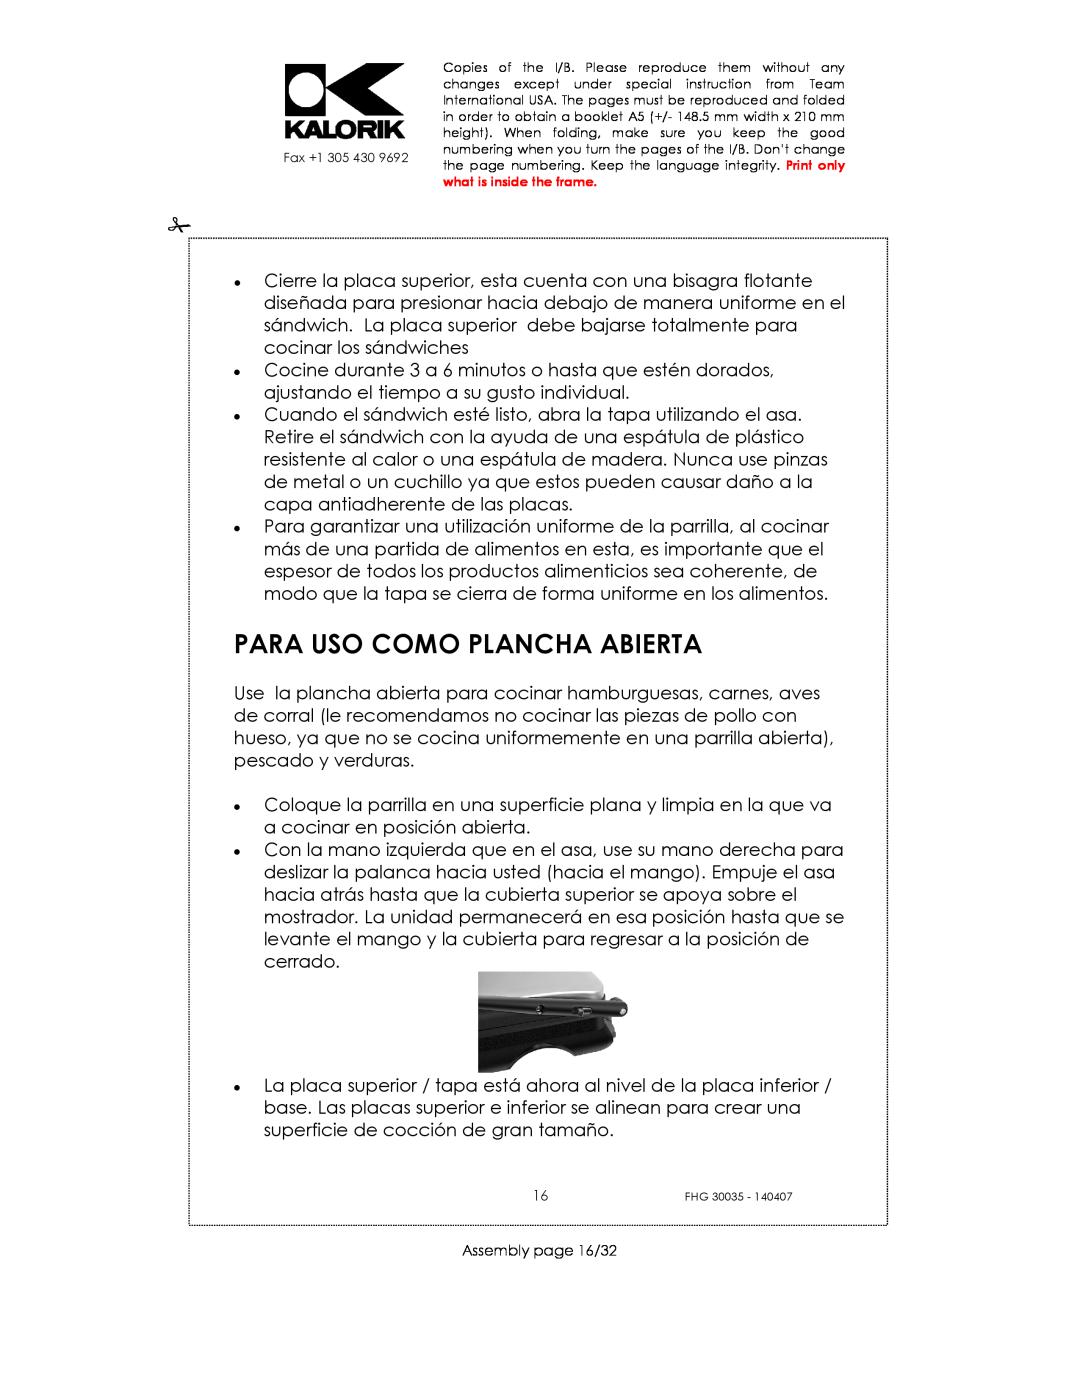 Kalorik FHG 30035 manual Para Uso Como Plancha Abierta, Assembly page 16/32 